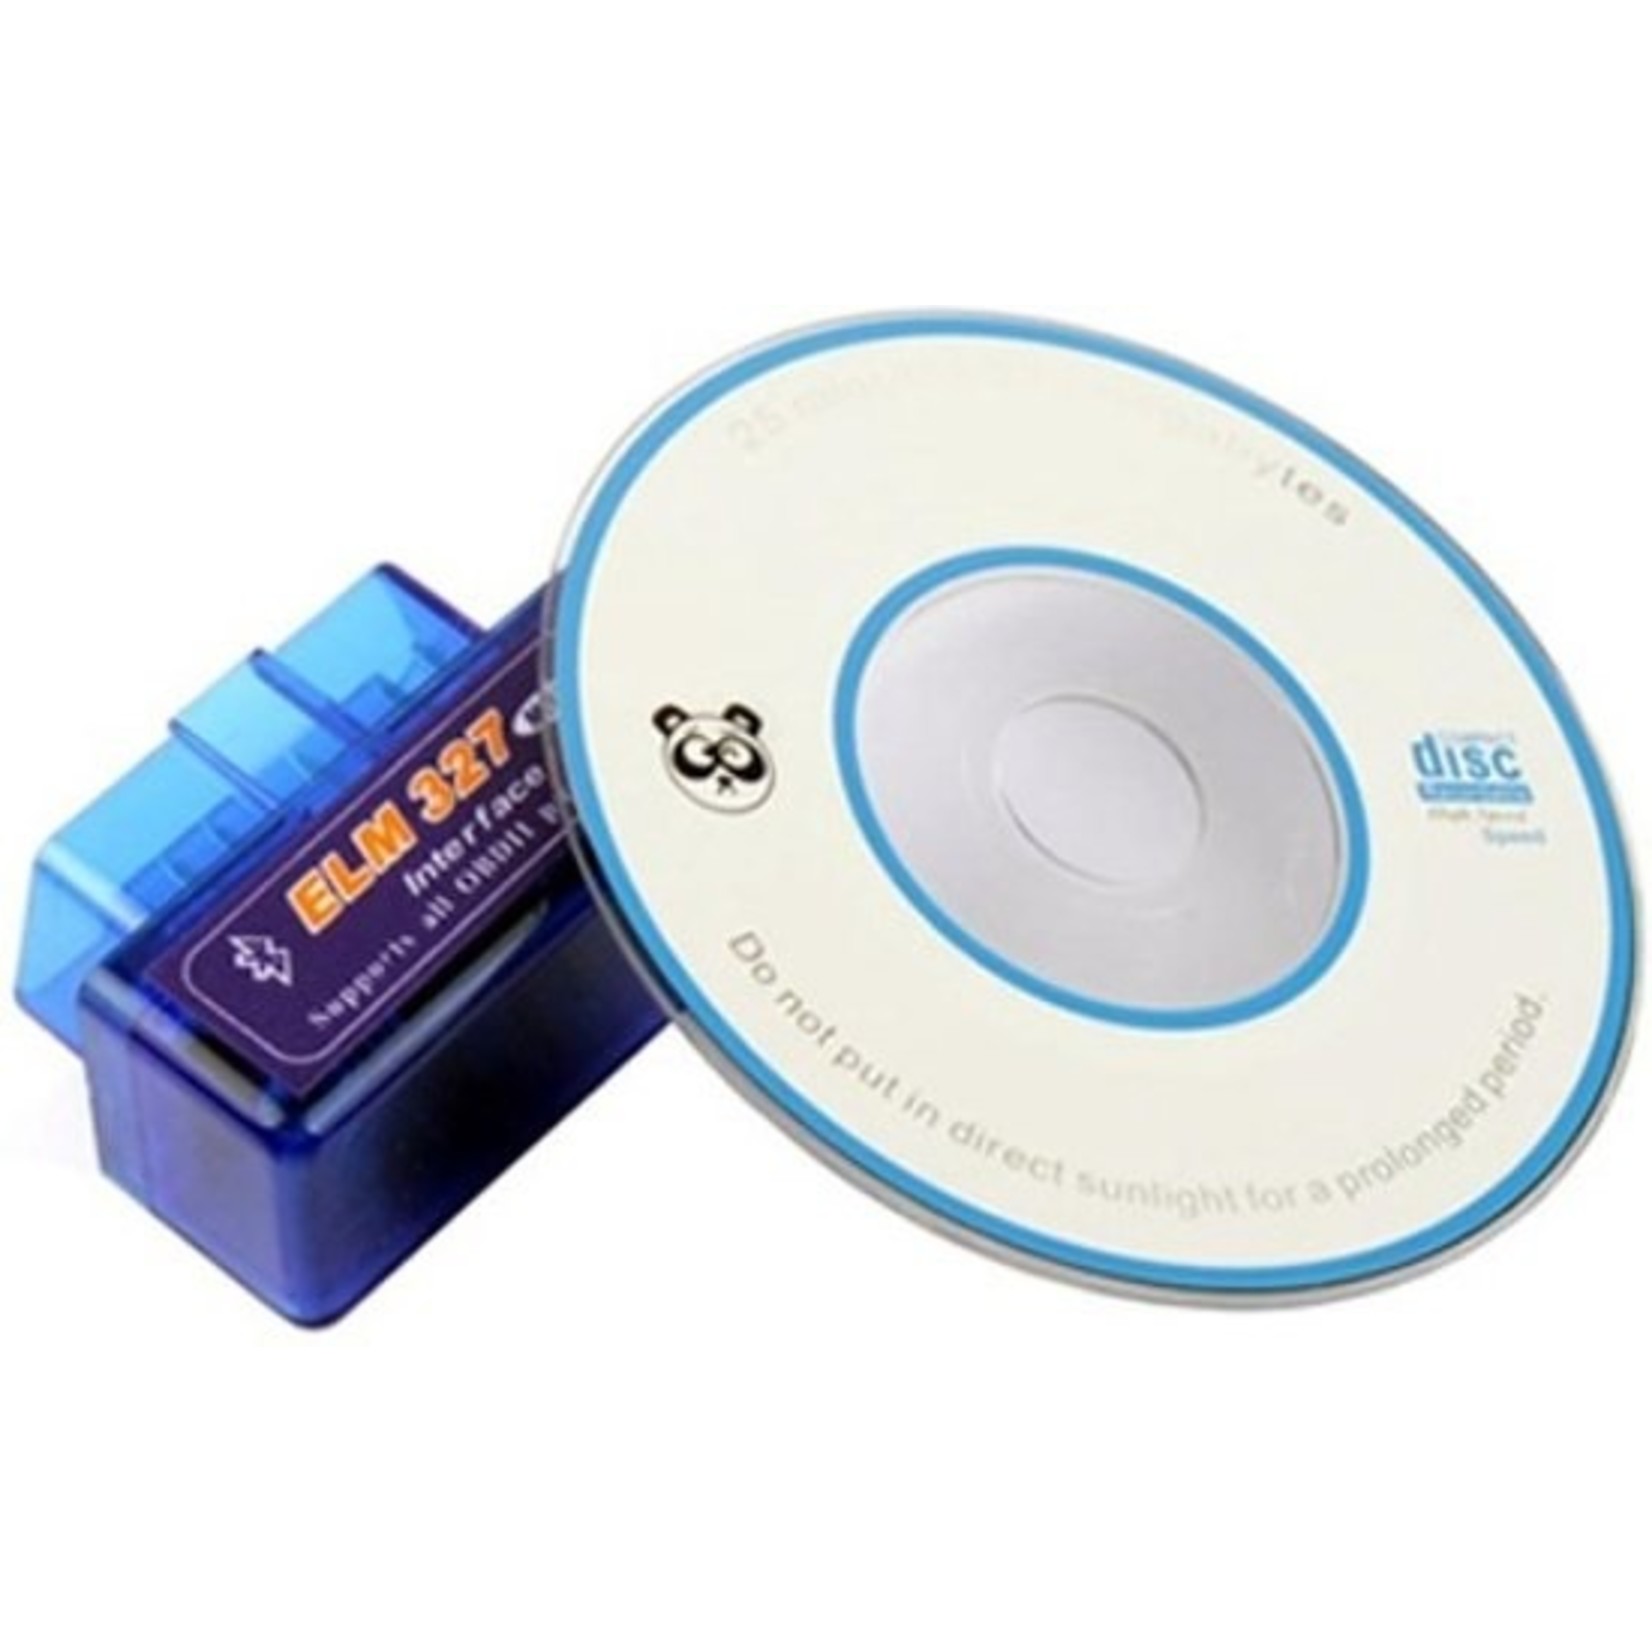 OBD2 mini Bluetooth Scanner